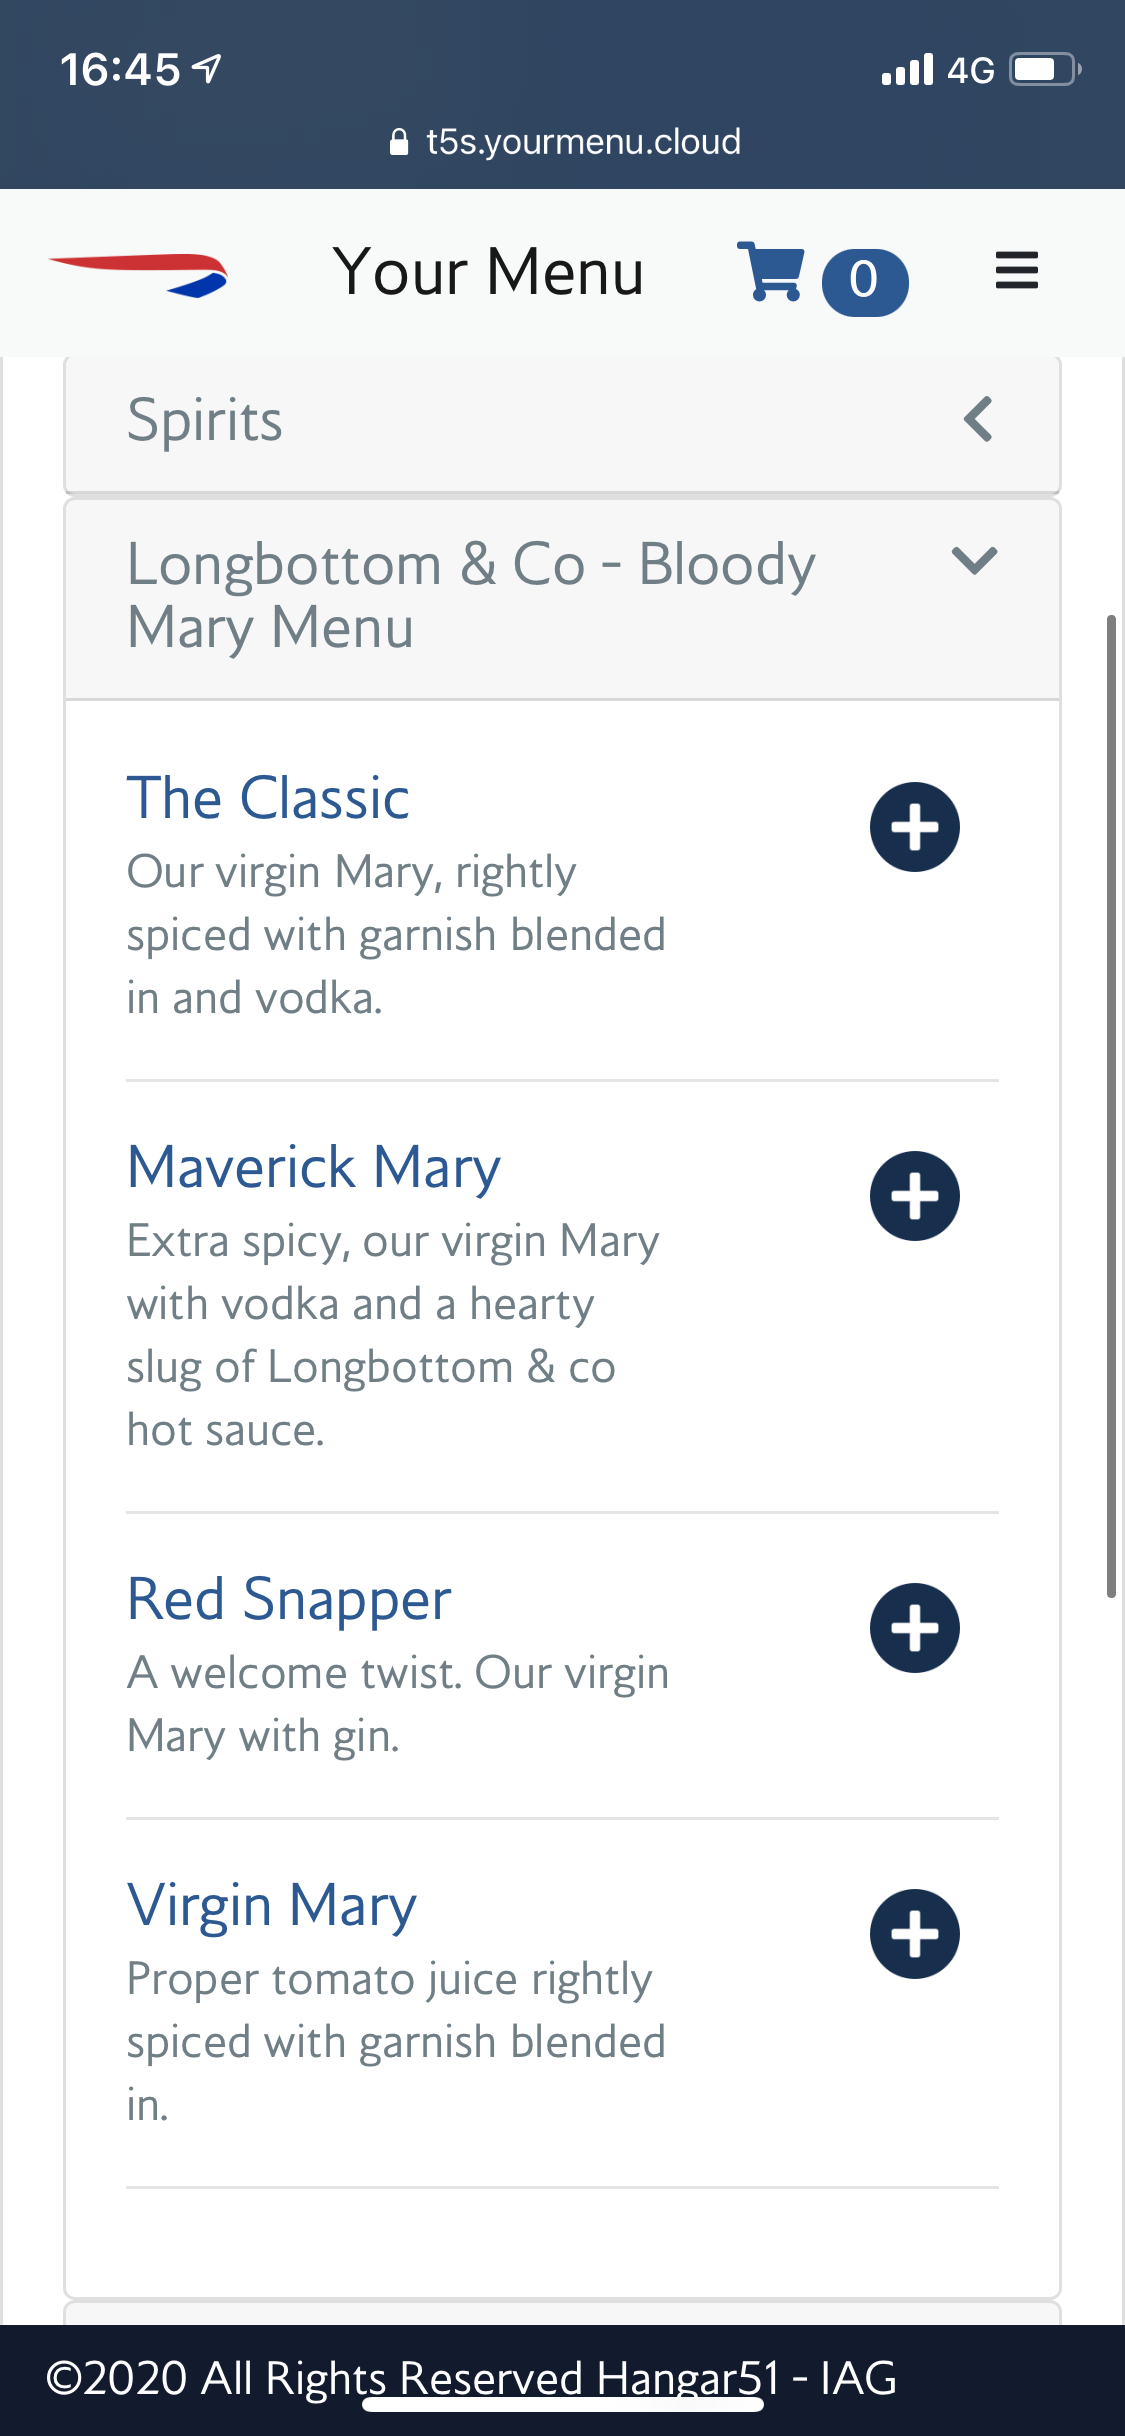 British Airways Galleries South Lounge drinks menu